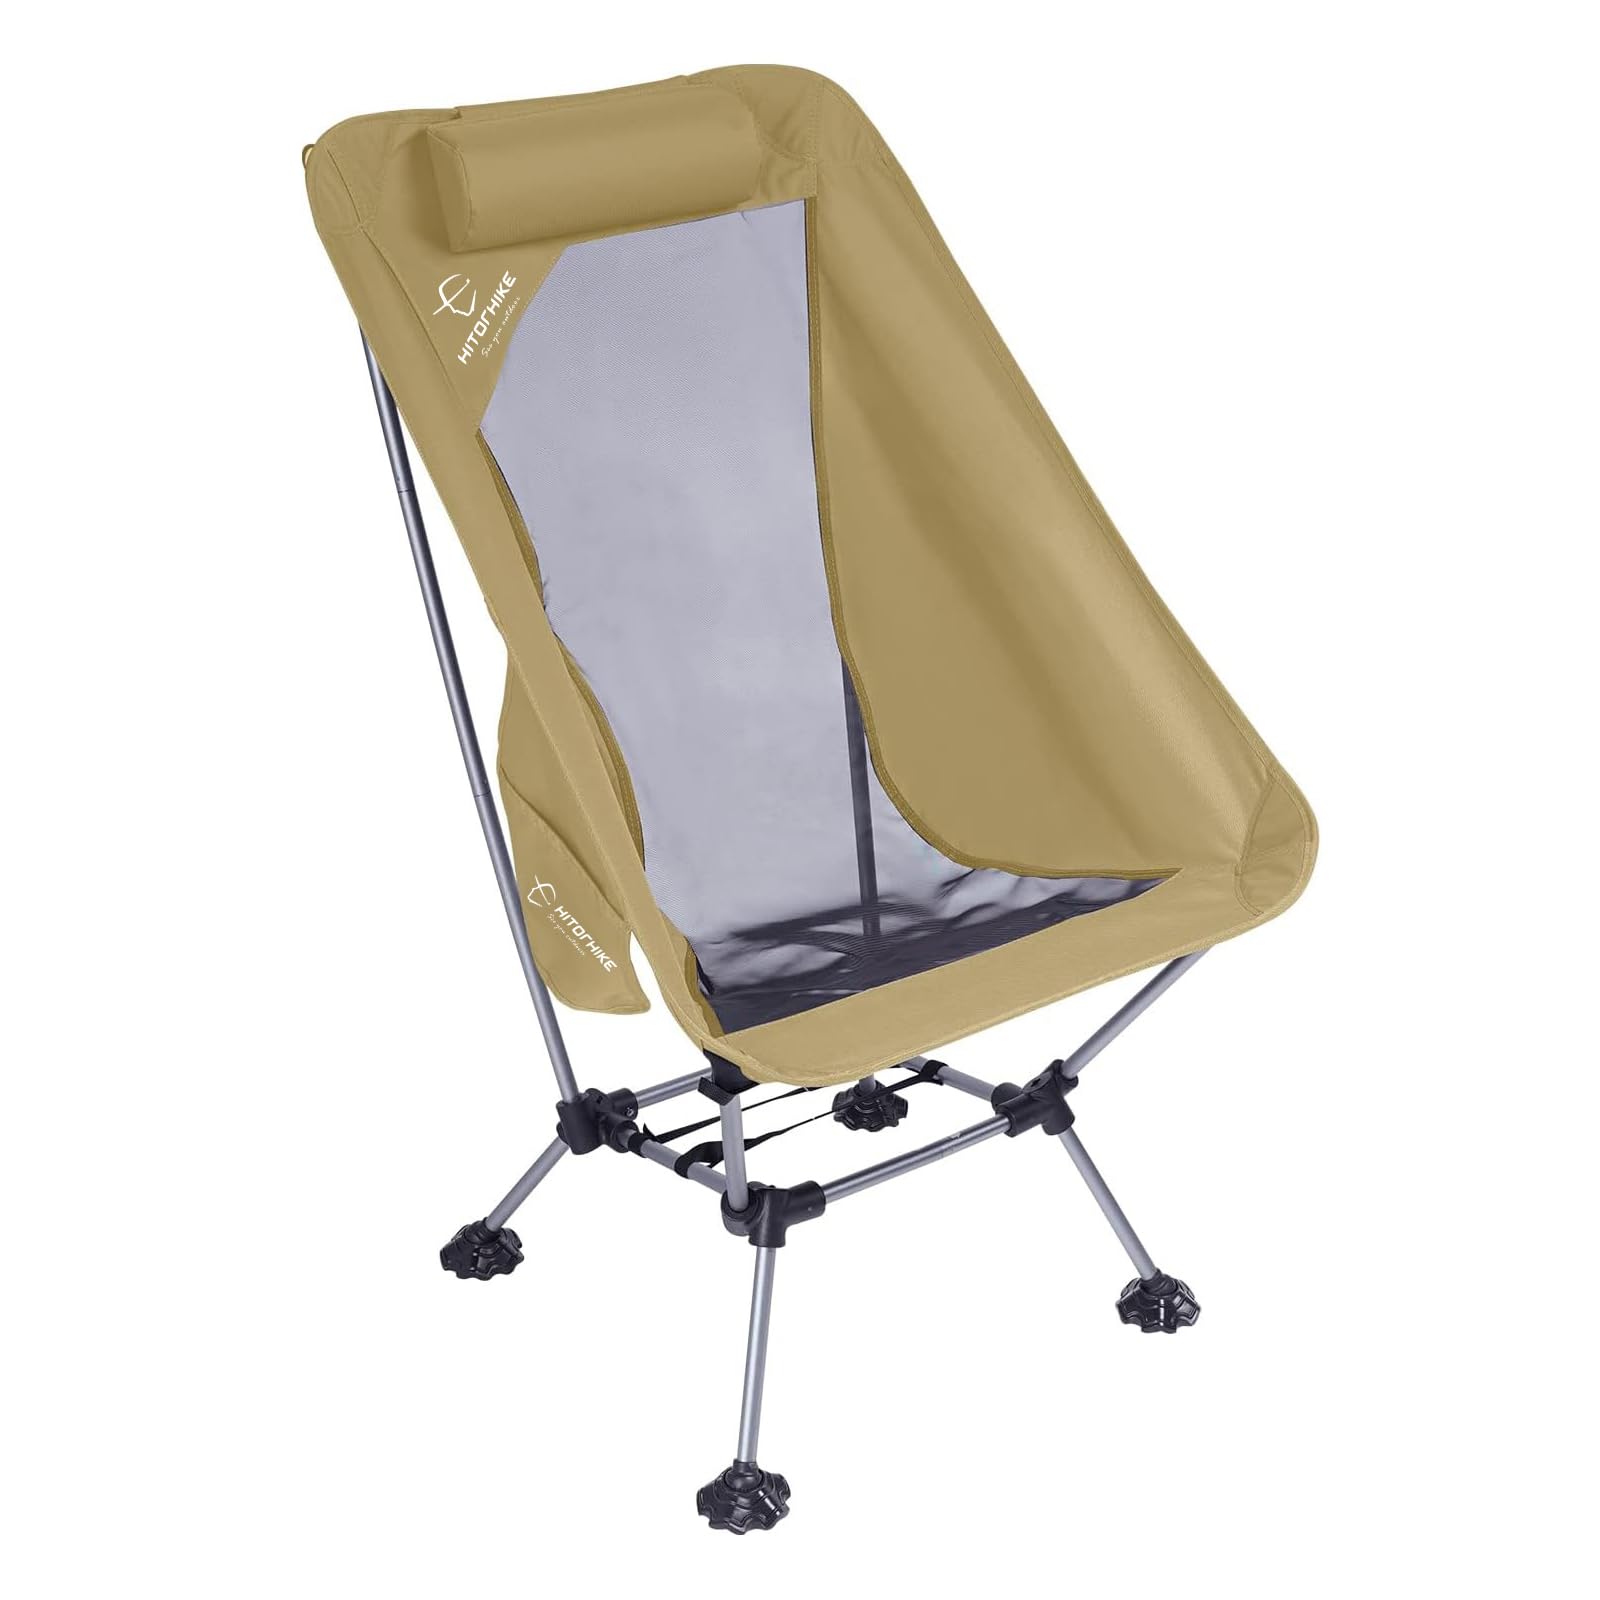 Ultra portable Camping Chair $22.4 at Amazon.